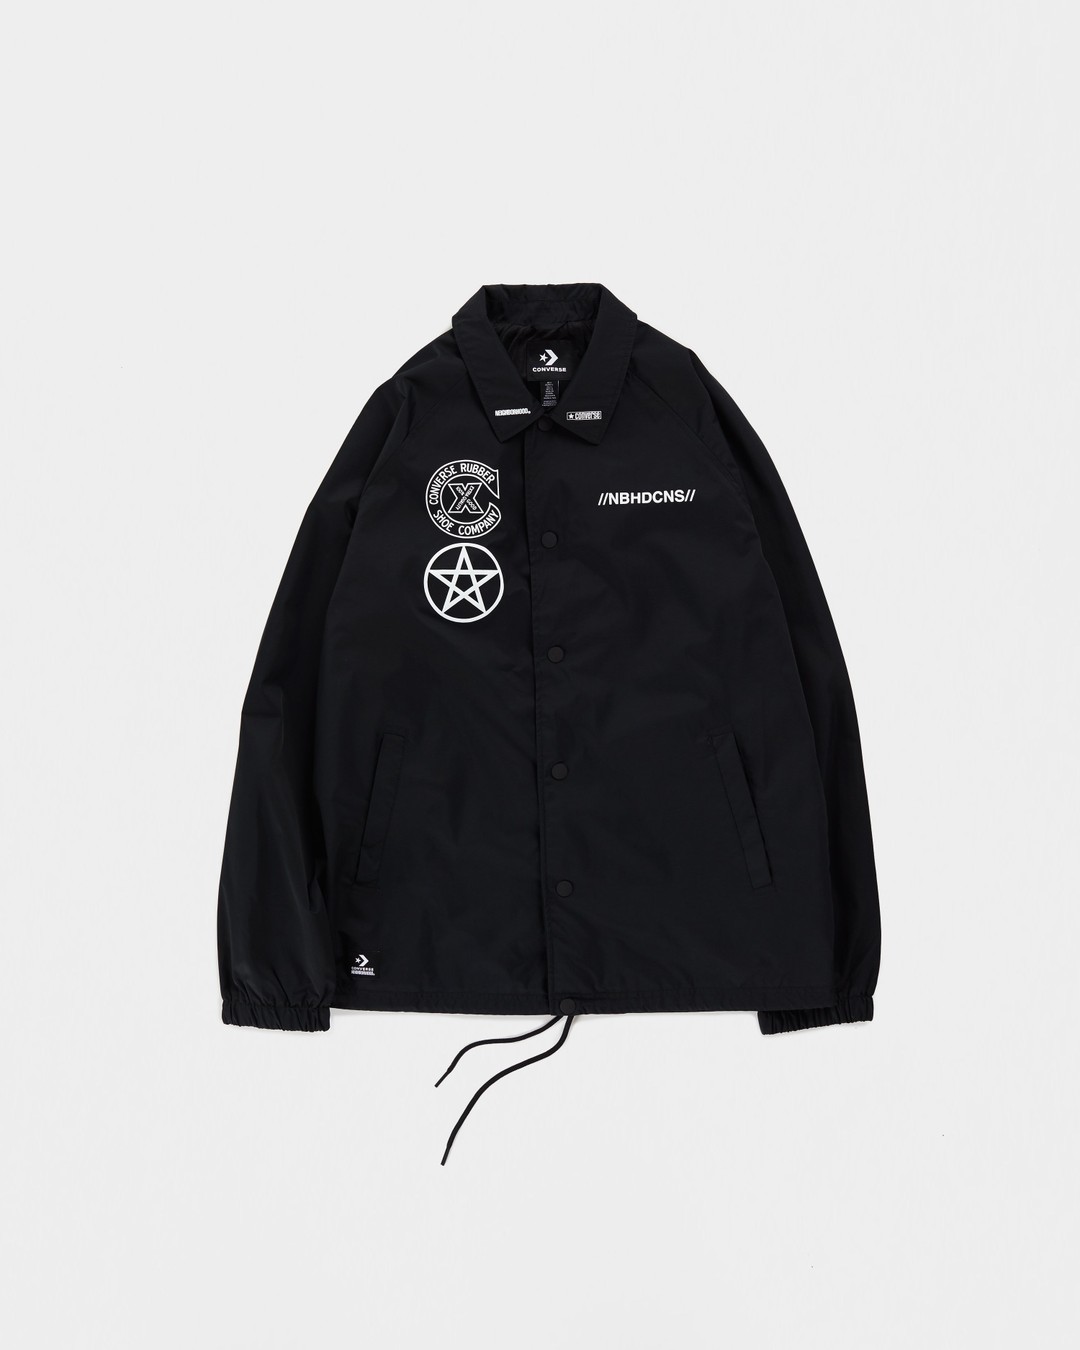 Converse x NBHD – Black Coaches Jacket - Outerwear - Black - Image 1